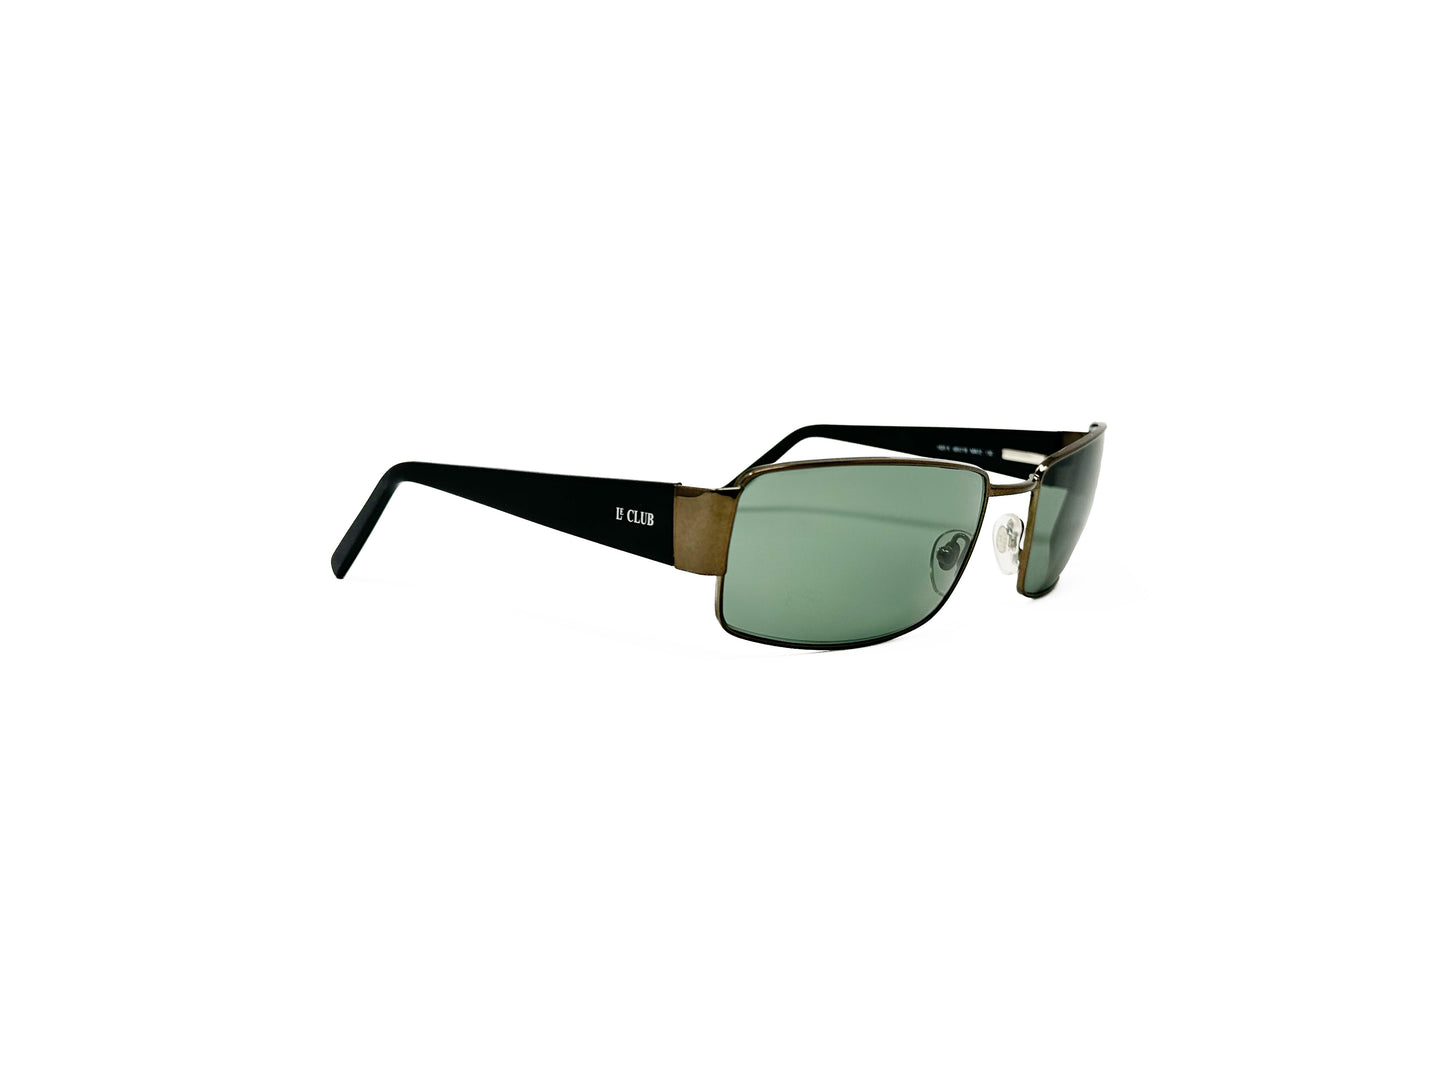 Le Club rectangular sunglasses. Model: 1431. Color: Maiz. Side view.